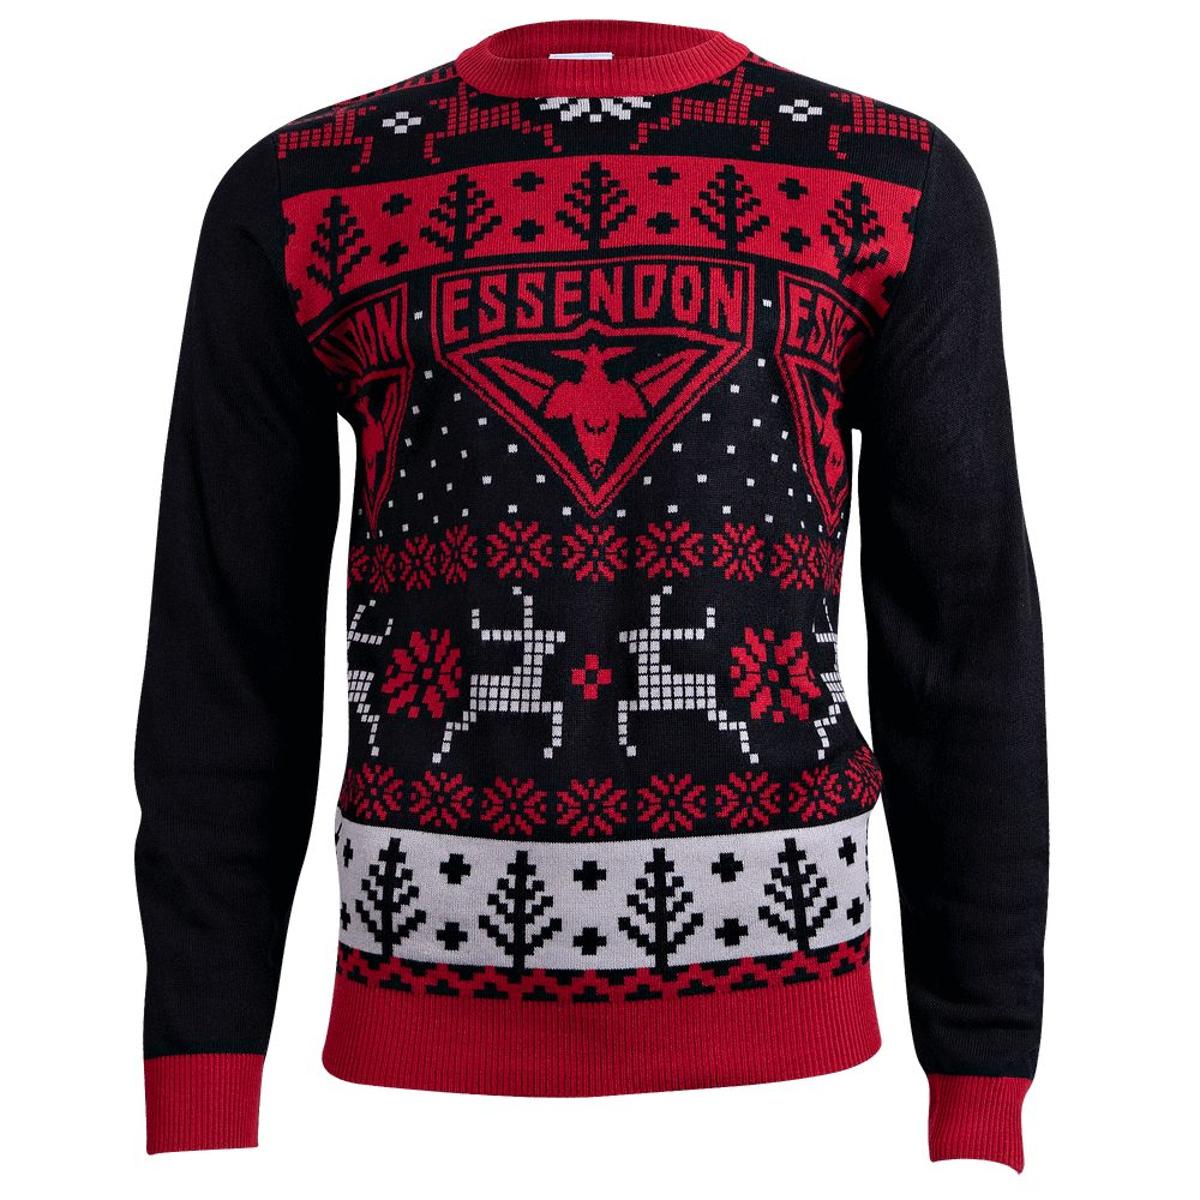 Essendon Bombers Ugly Christmas Sweater